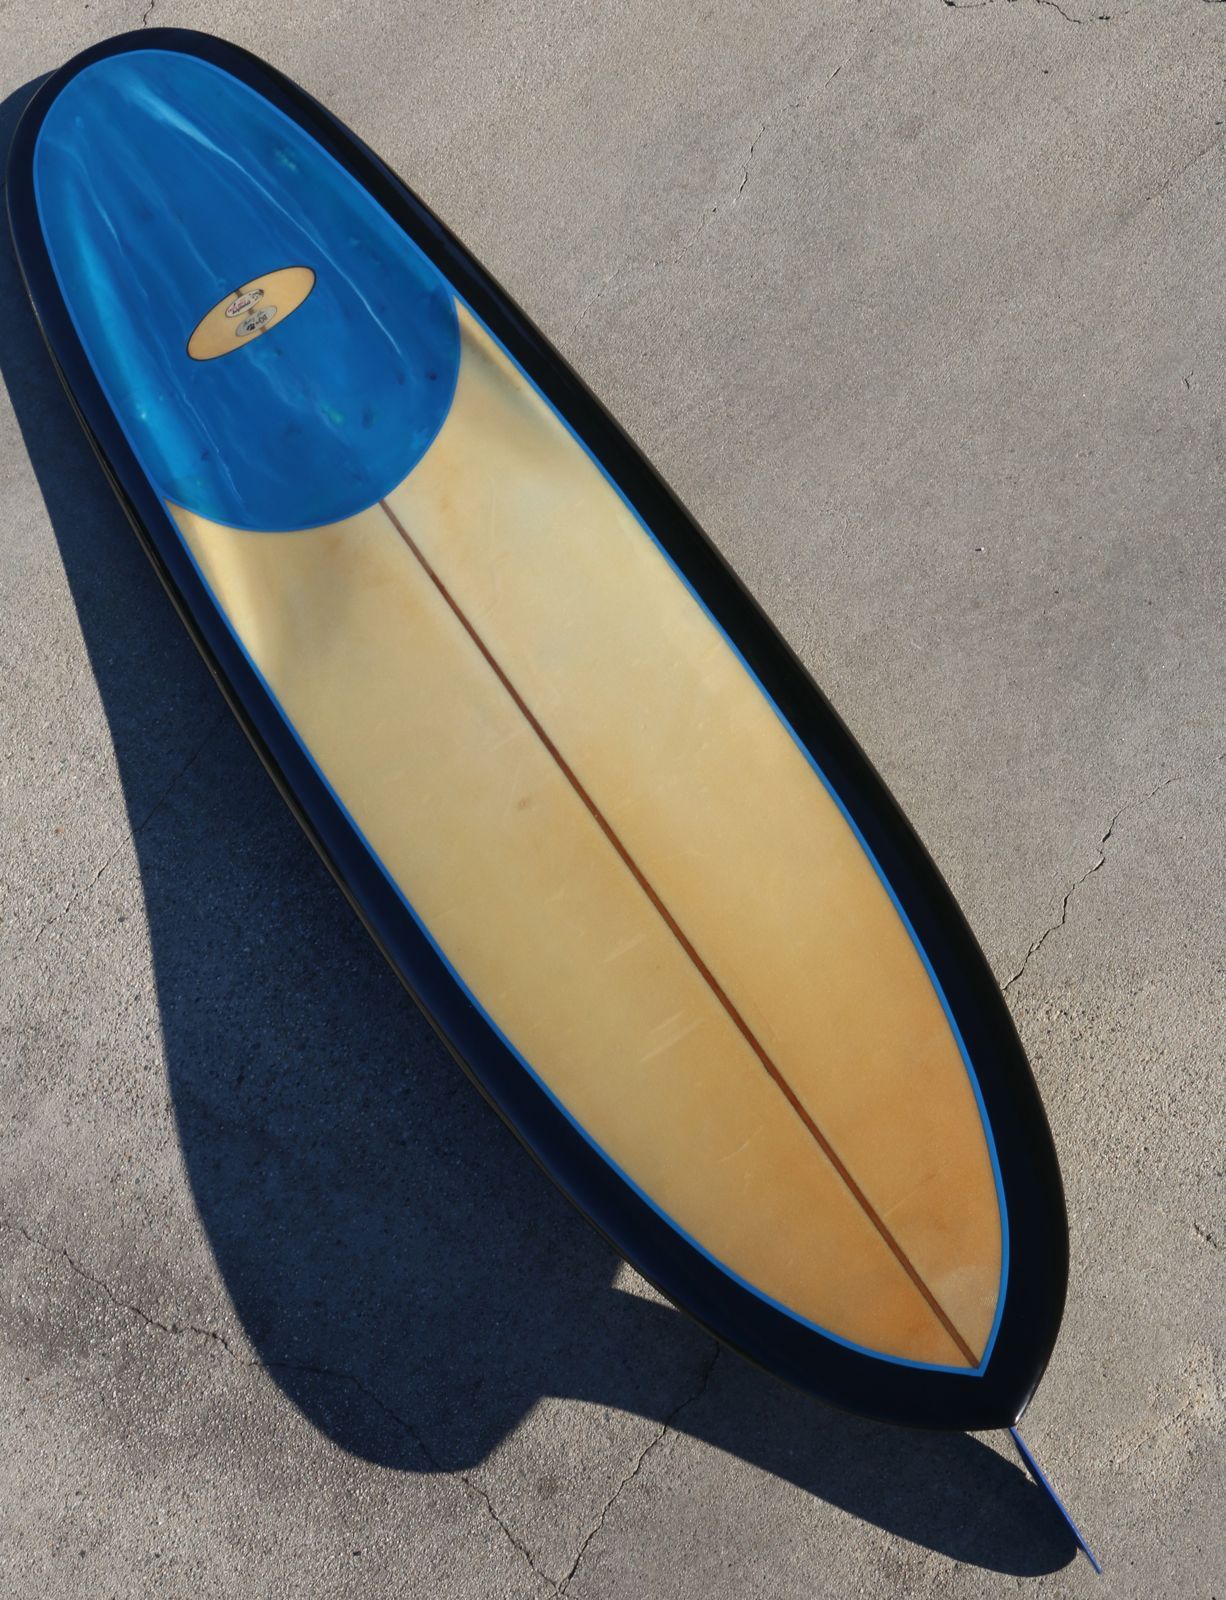 miki dora surfboard